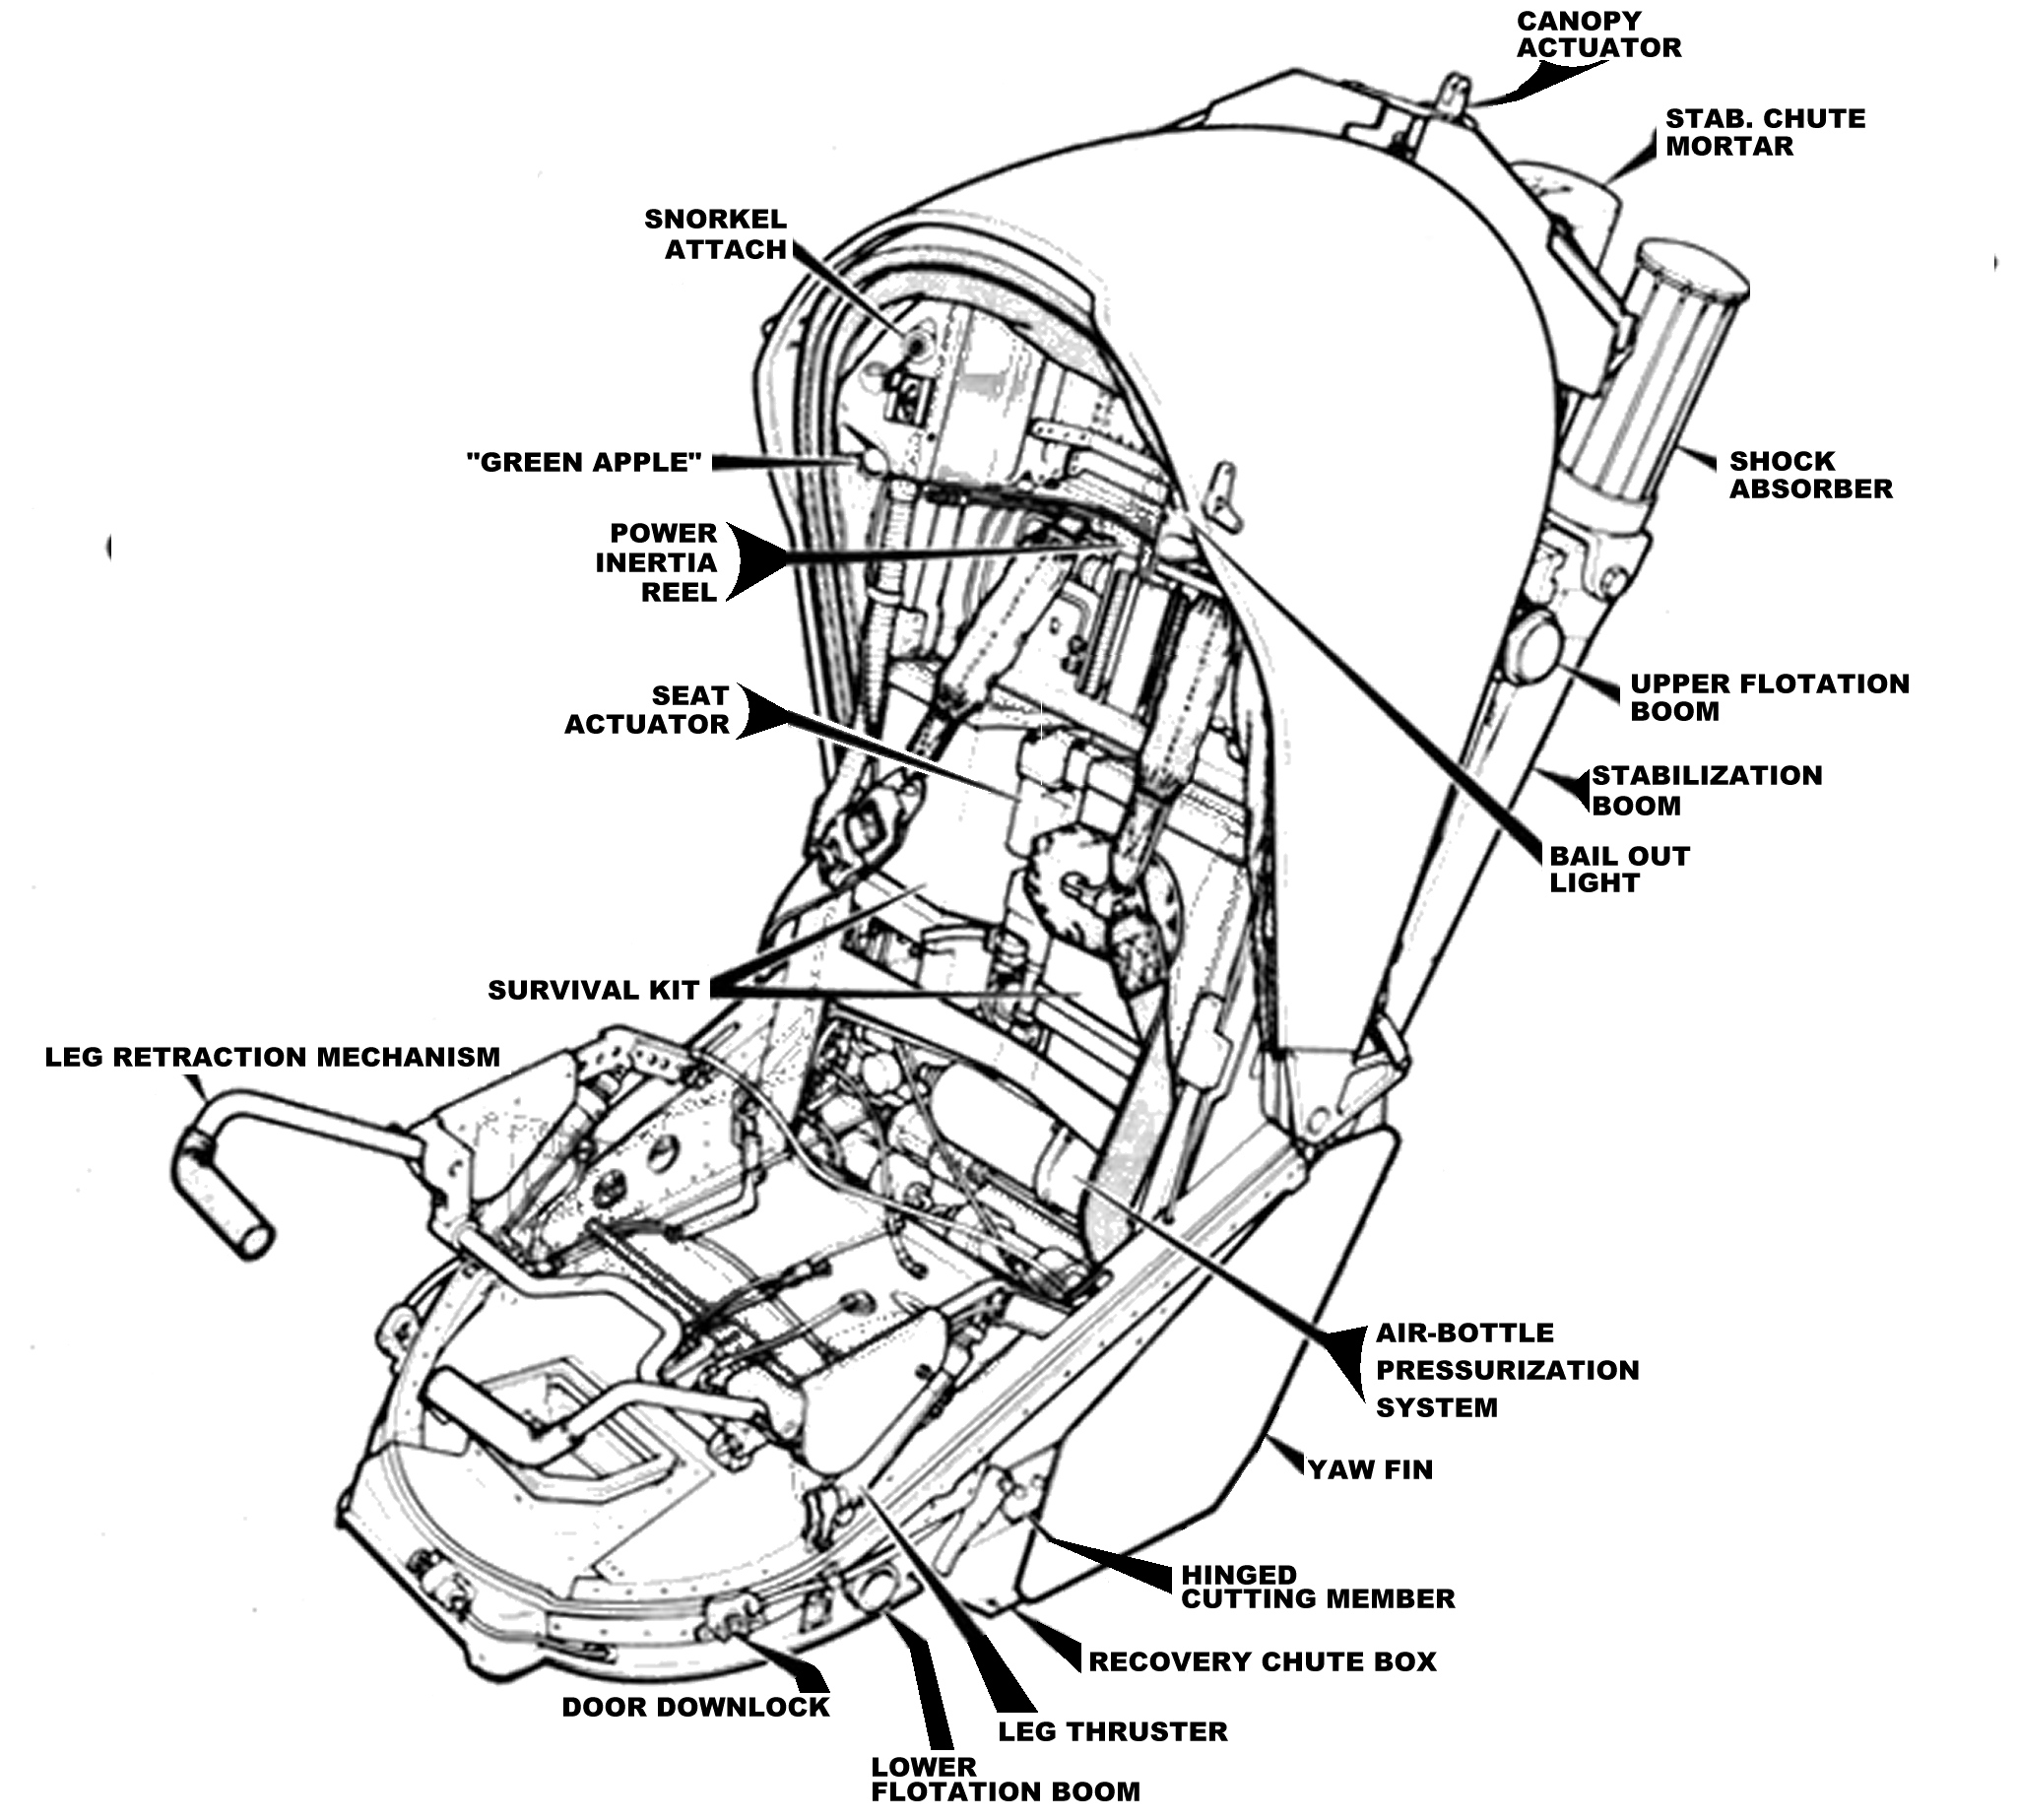 Stanley capsule - diagram